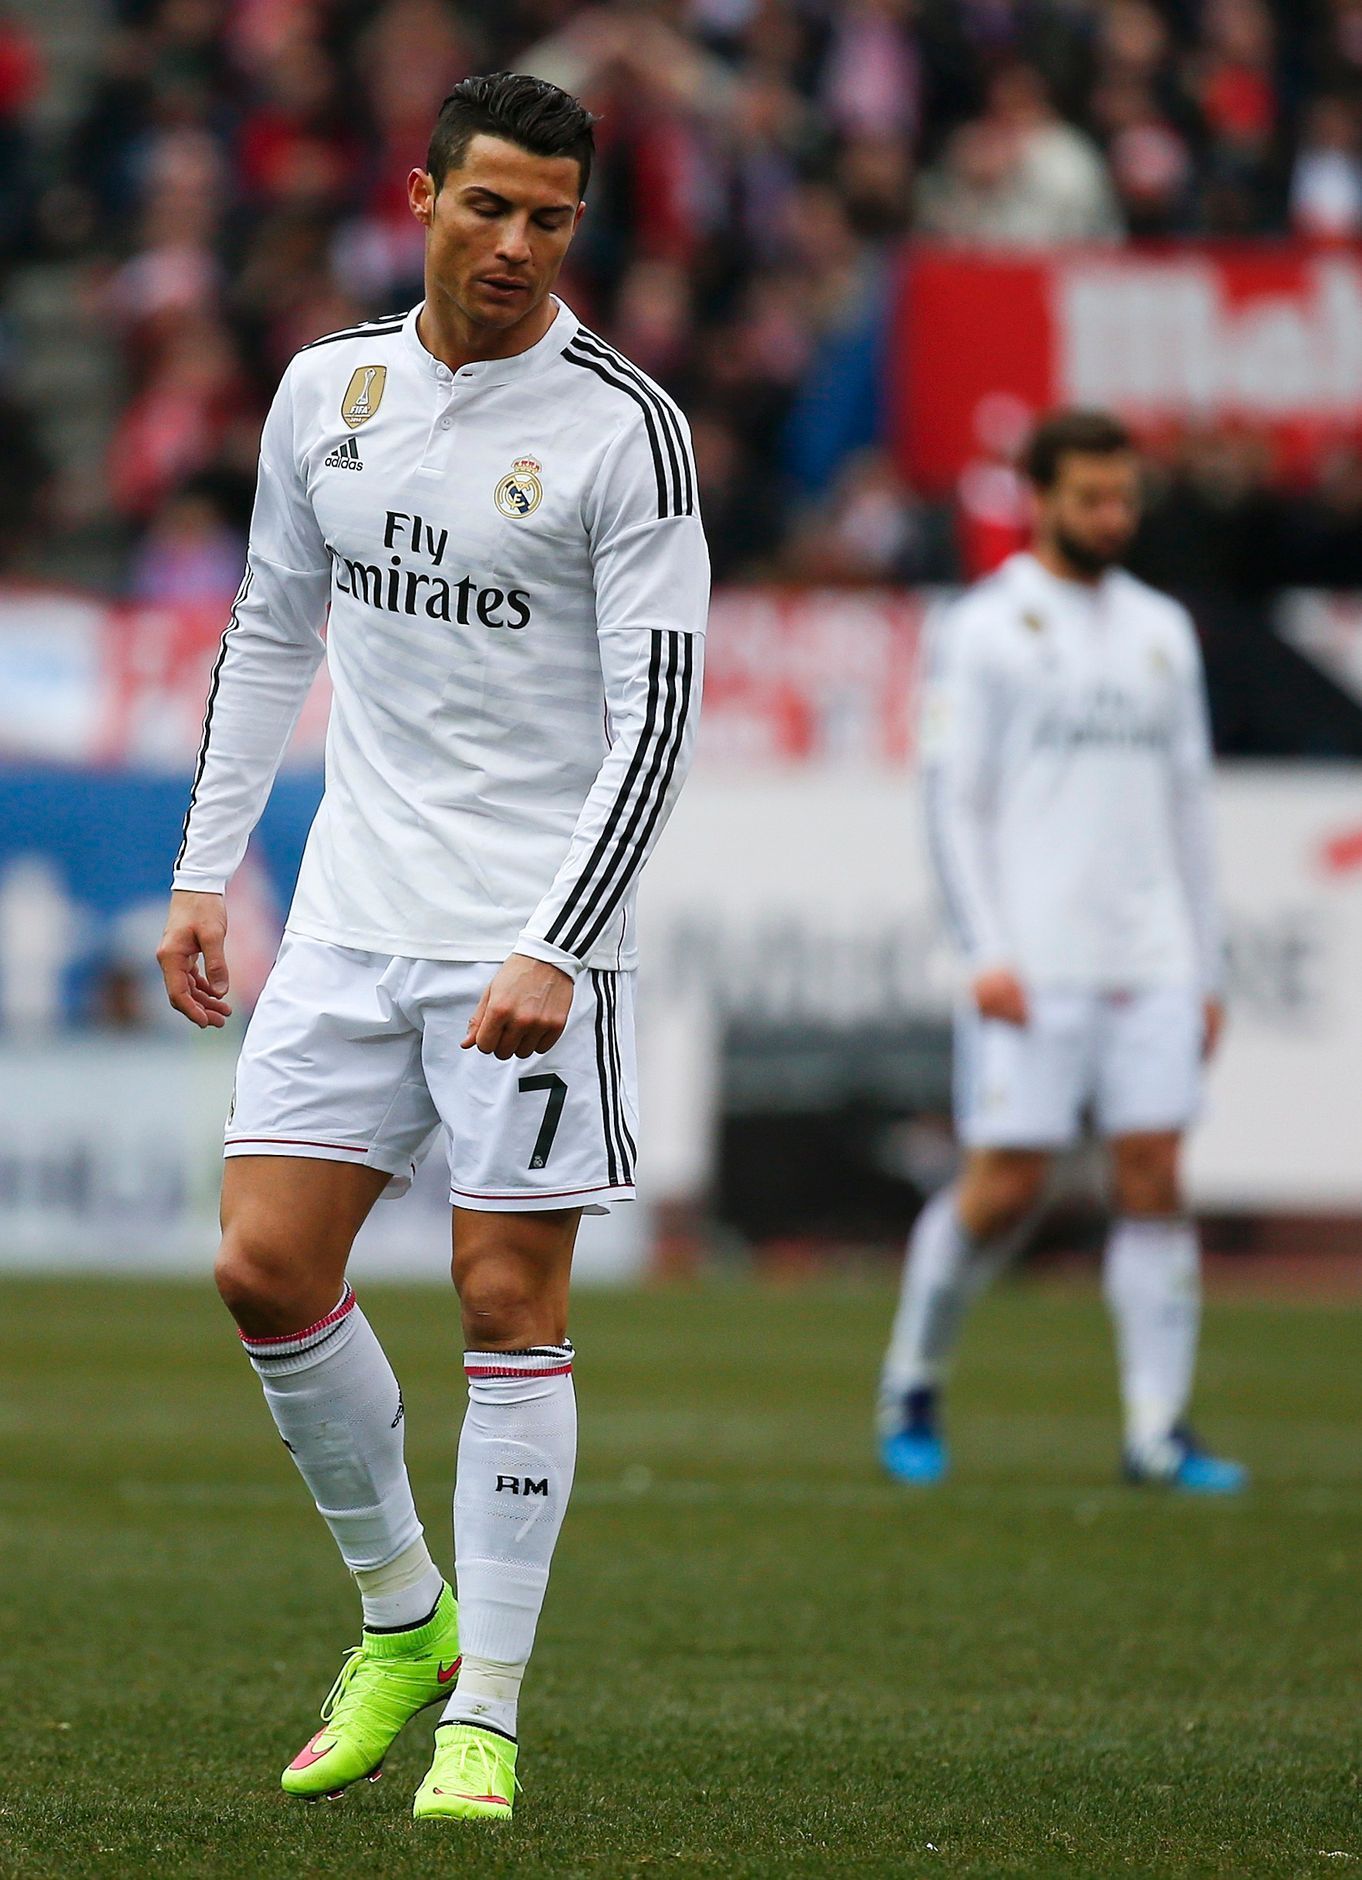 Cristiano Ronaldo smutní po porážce Realu v derby s Atlétikem